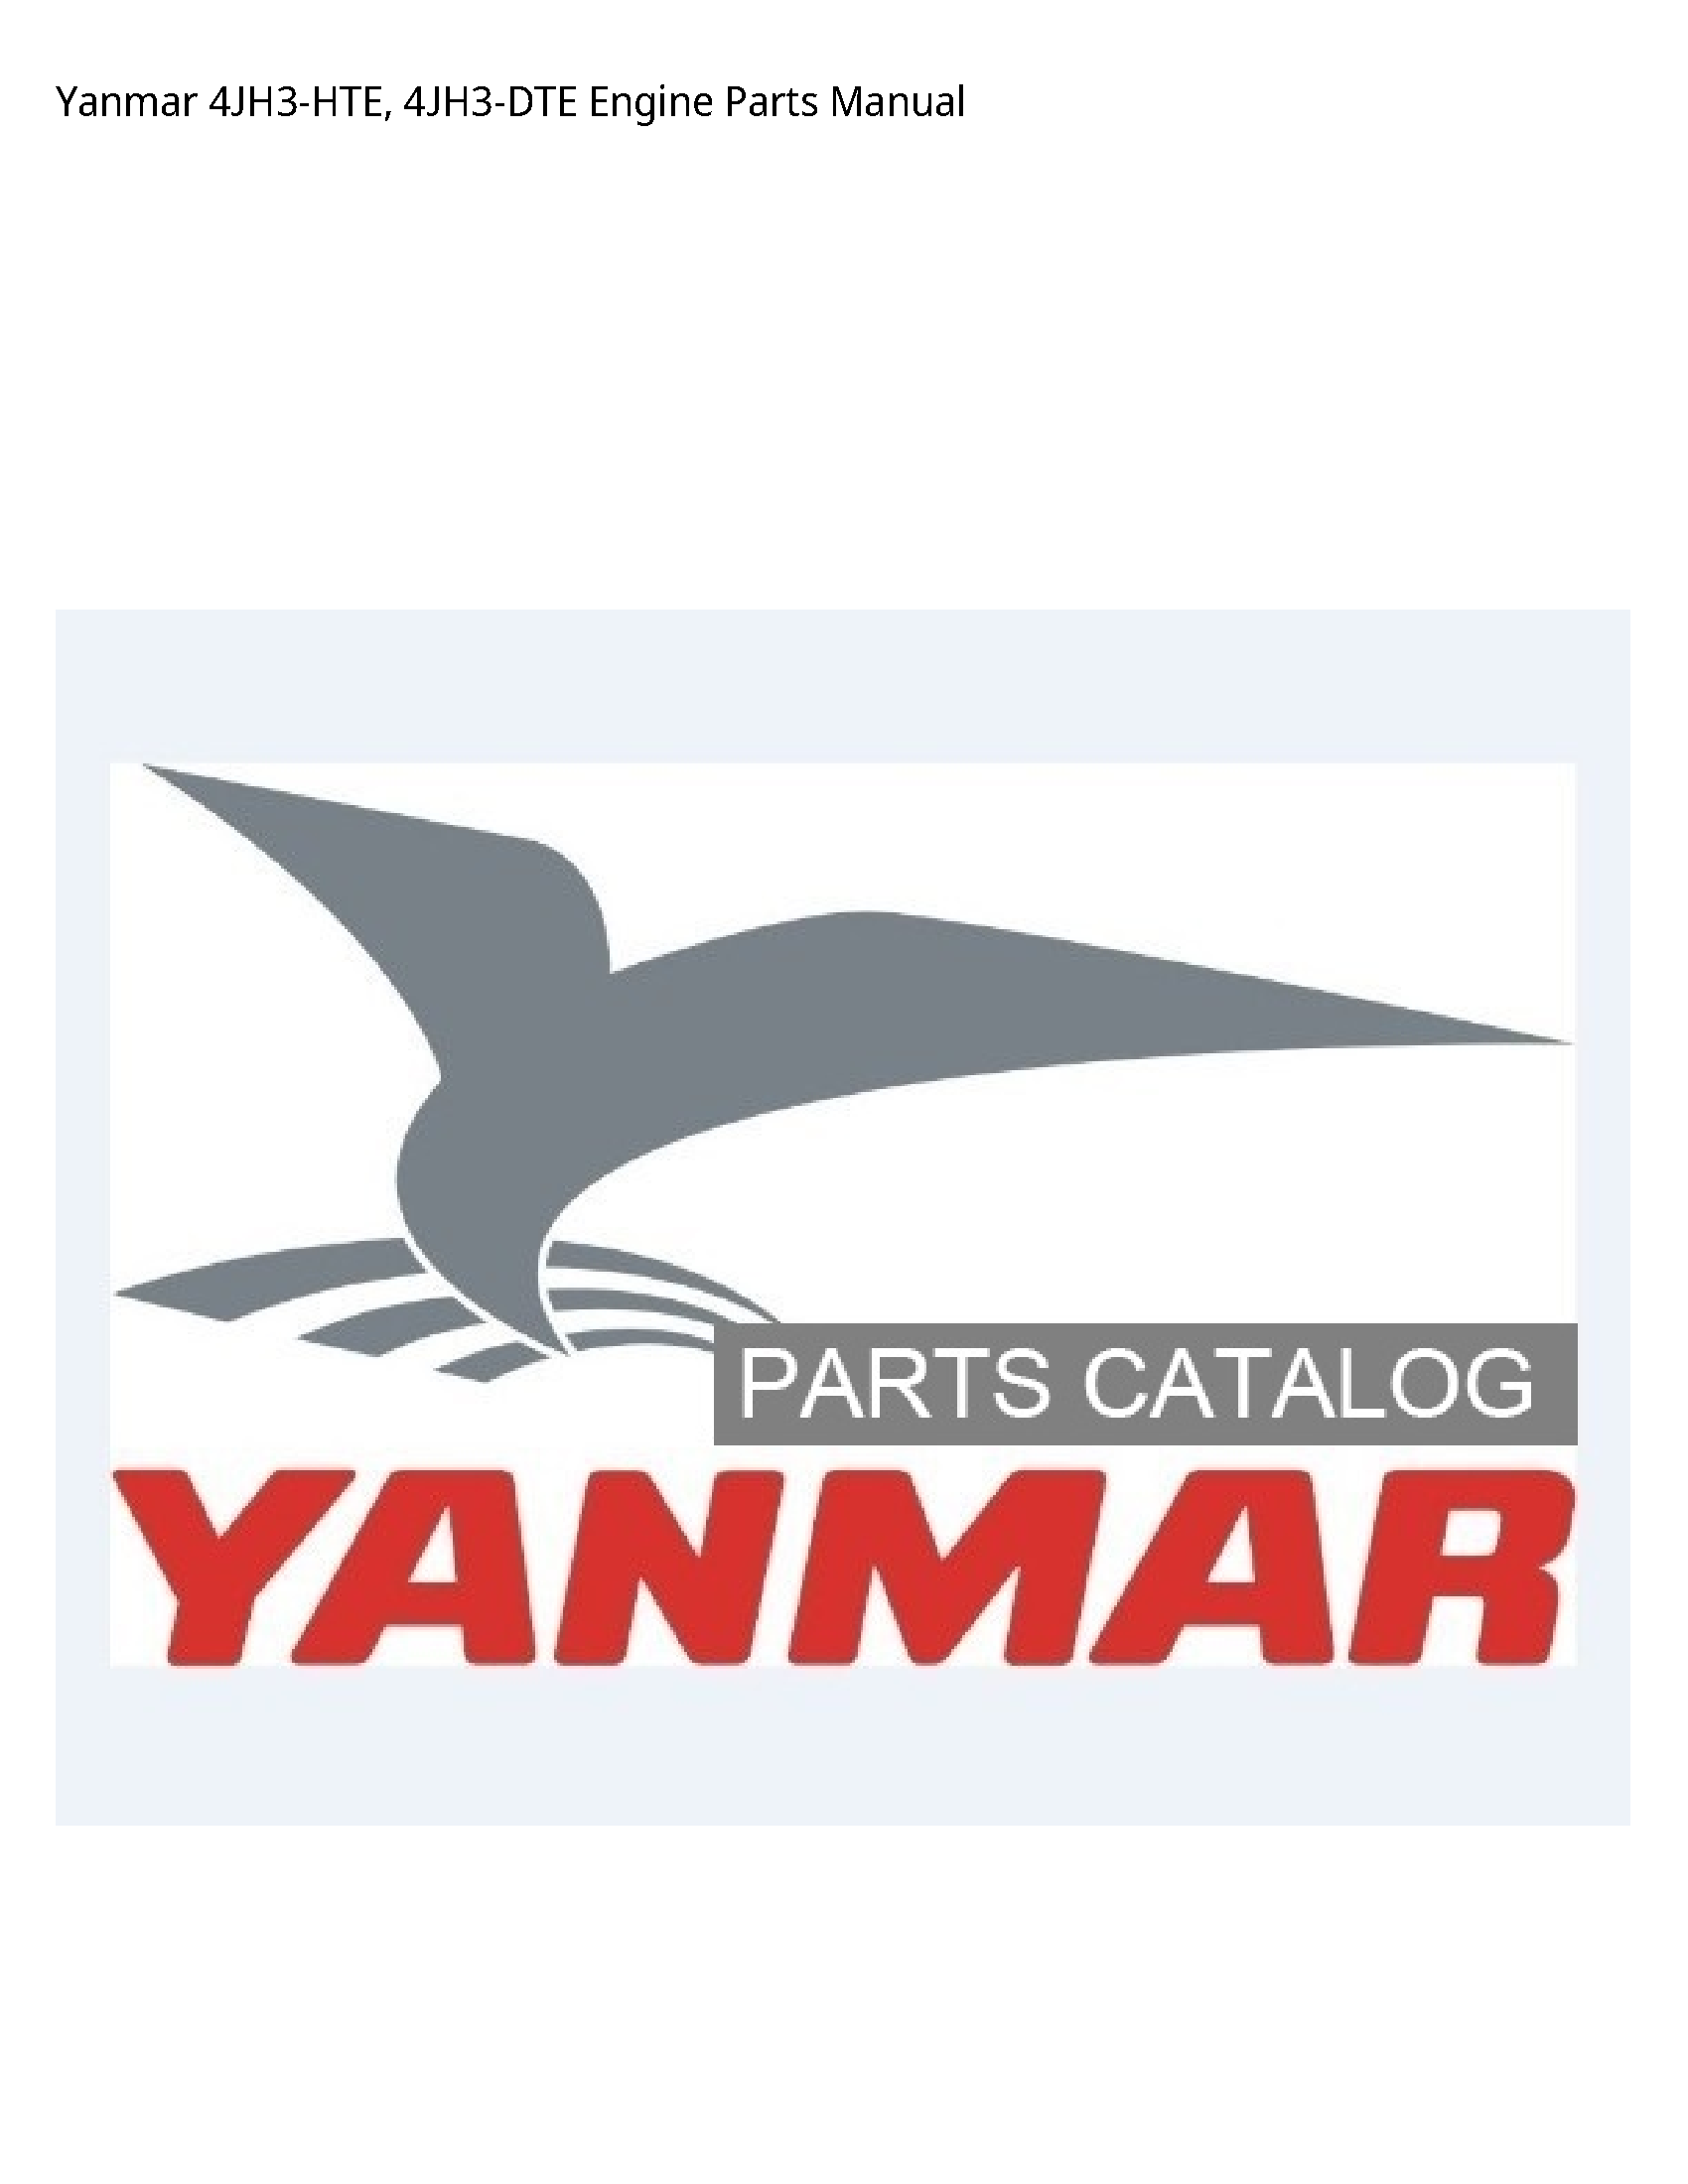 Yanmar 4JH3-HTE Engine Parts manual